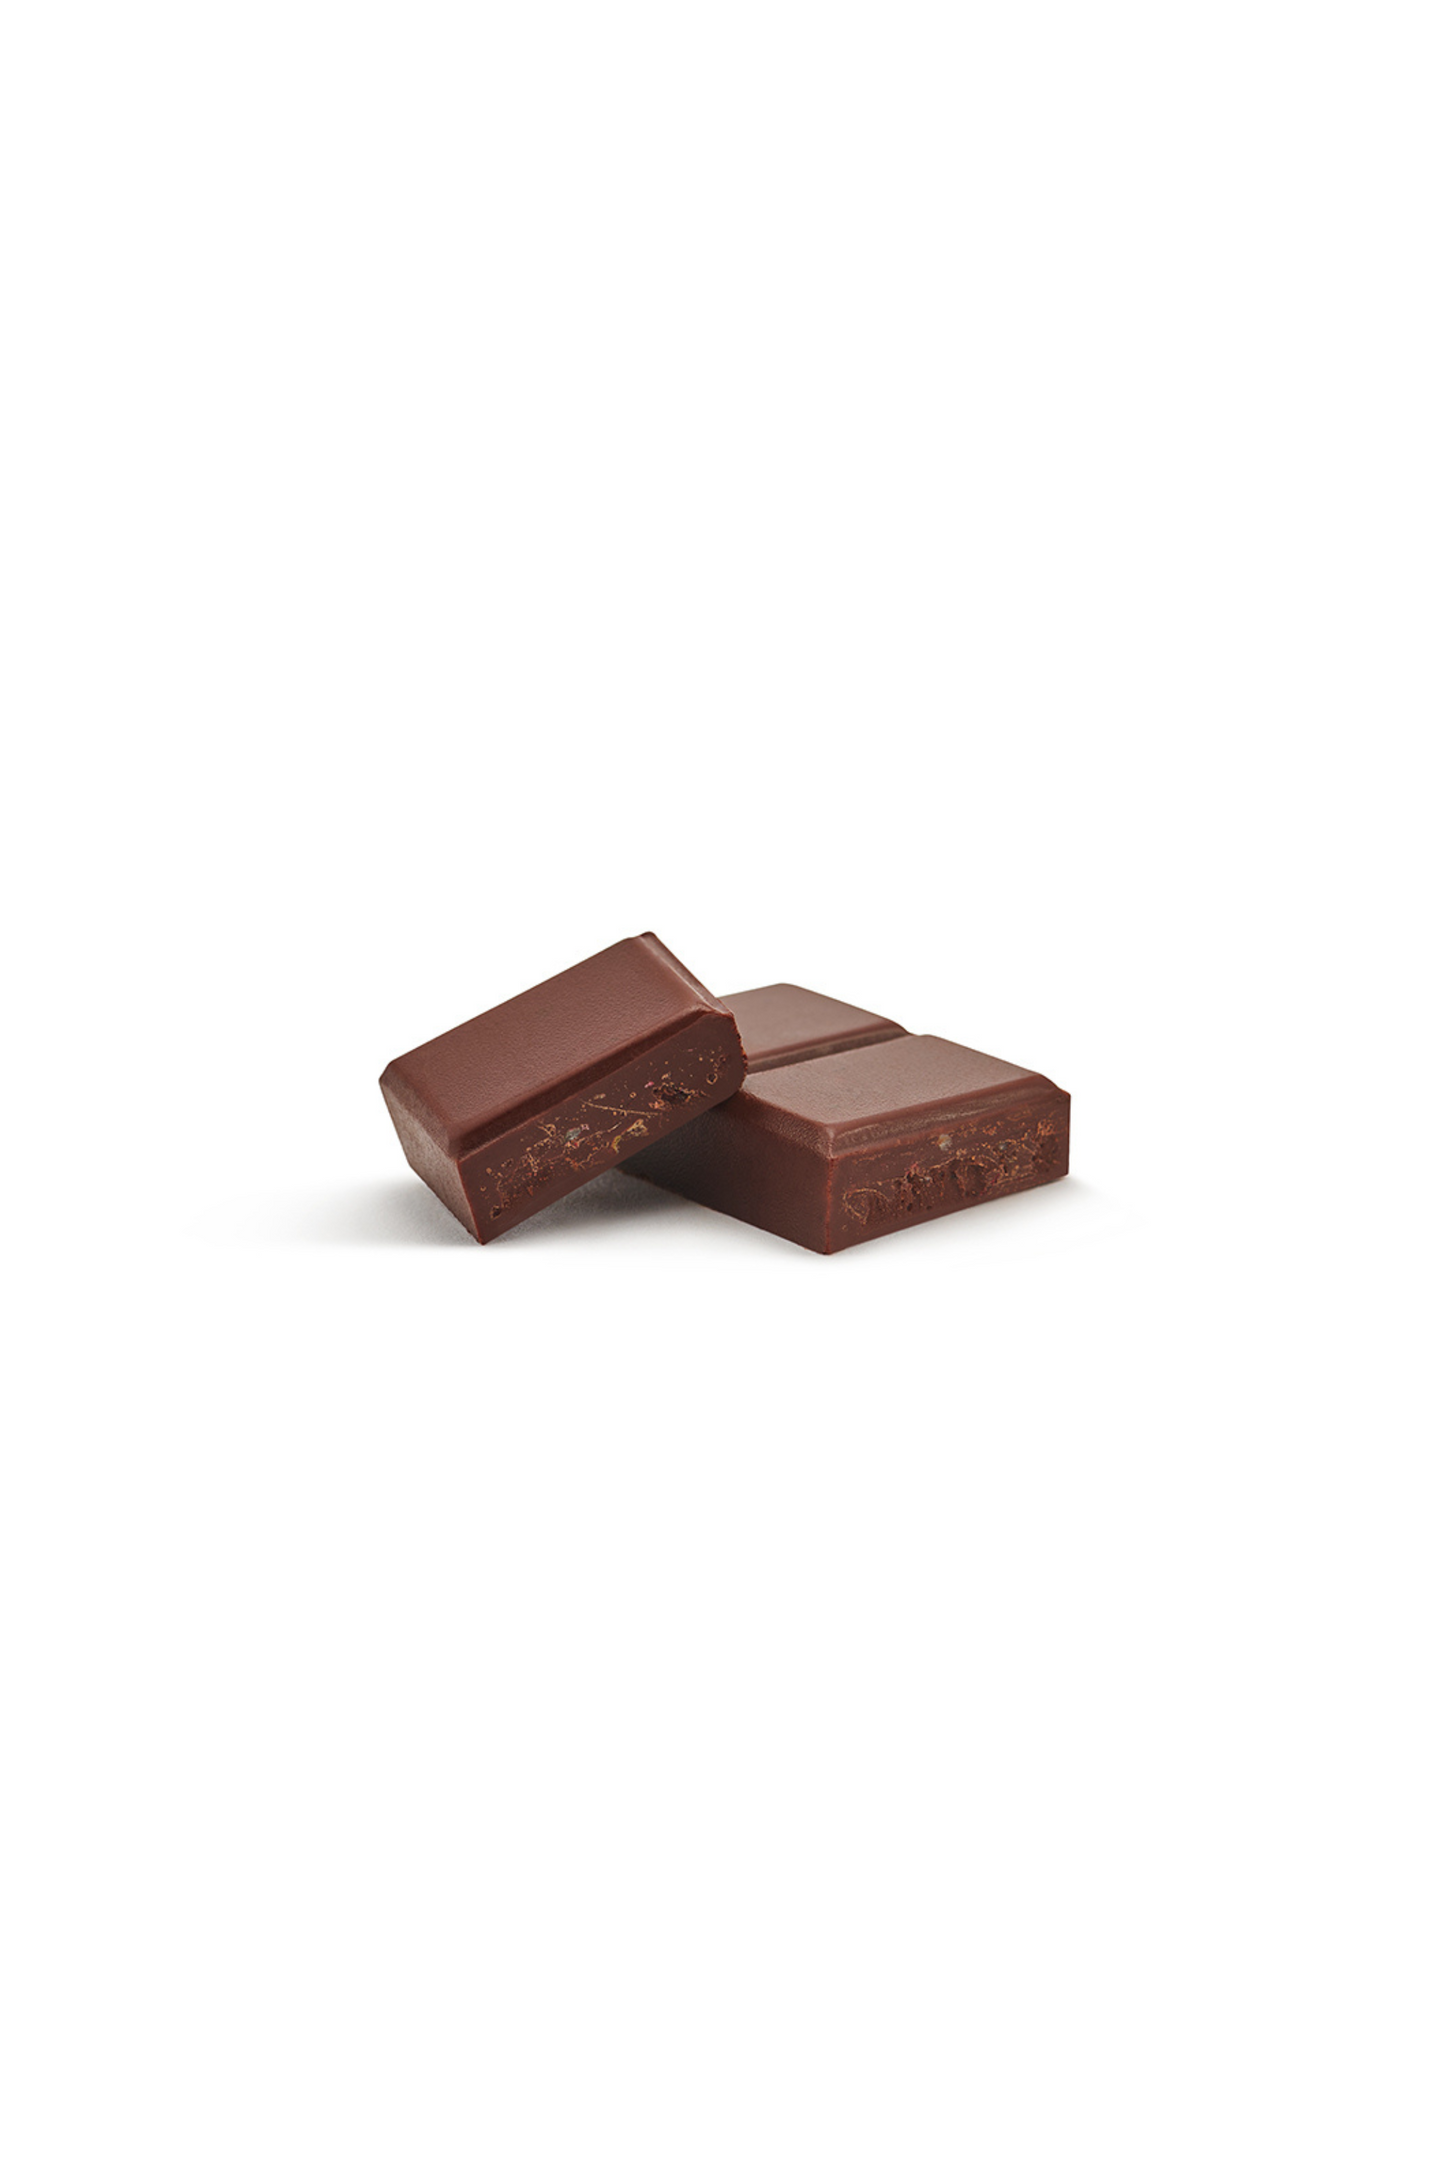 Bean -to-Bar. Black Currant Dark Chocolate, 
no added sugar 70% cocoa content. Vegan